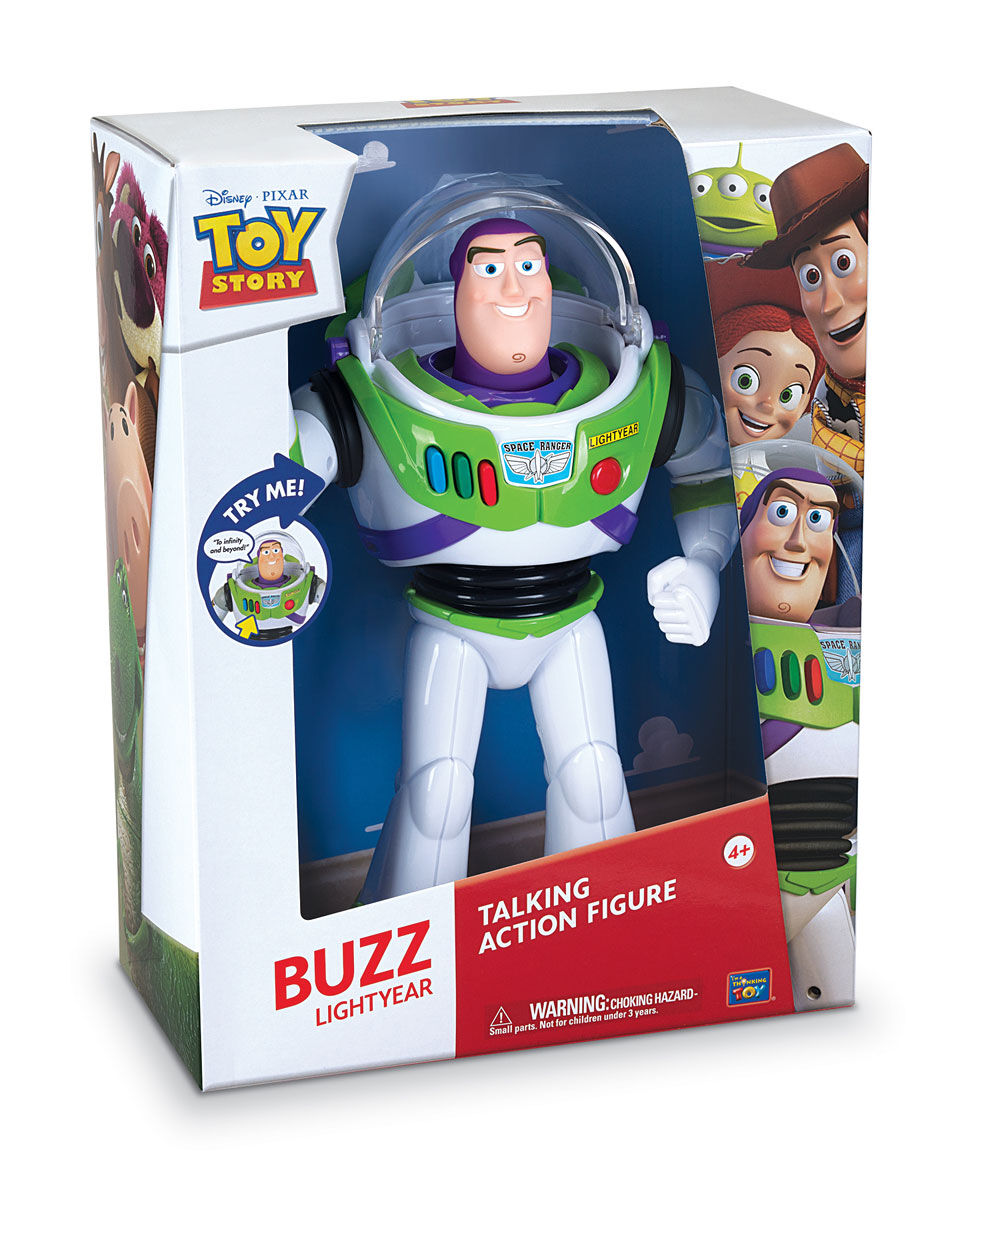 Original Disney Buzz Lightyear Toy Story 3 TALKING ACTION FIGURE FIGURINE NEW BOXED